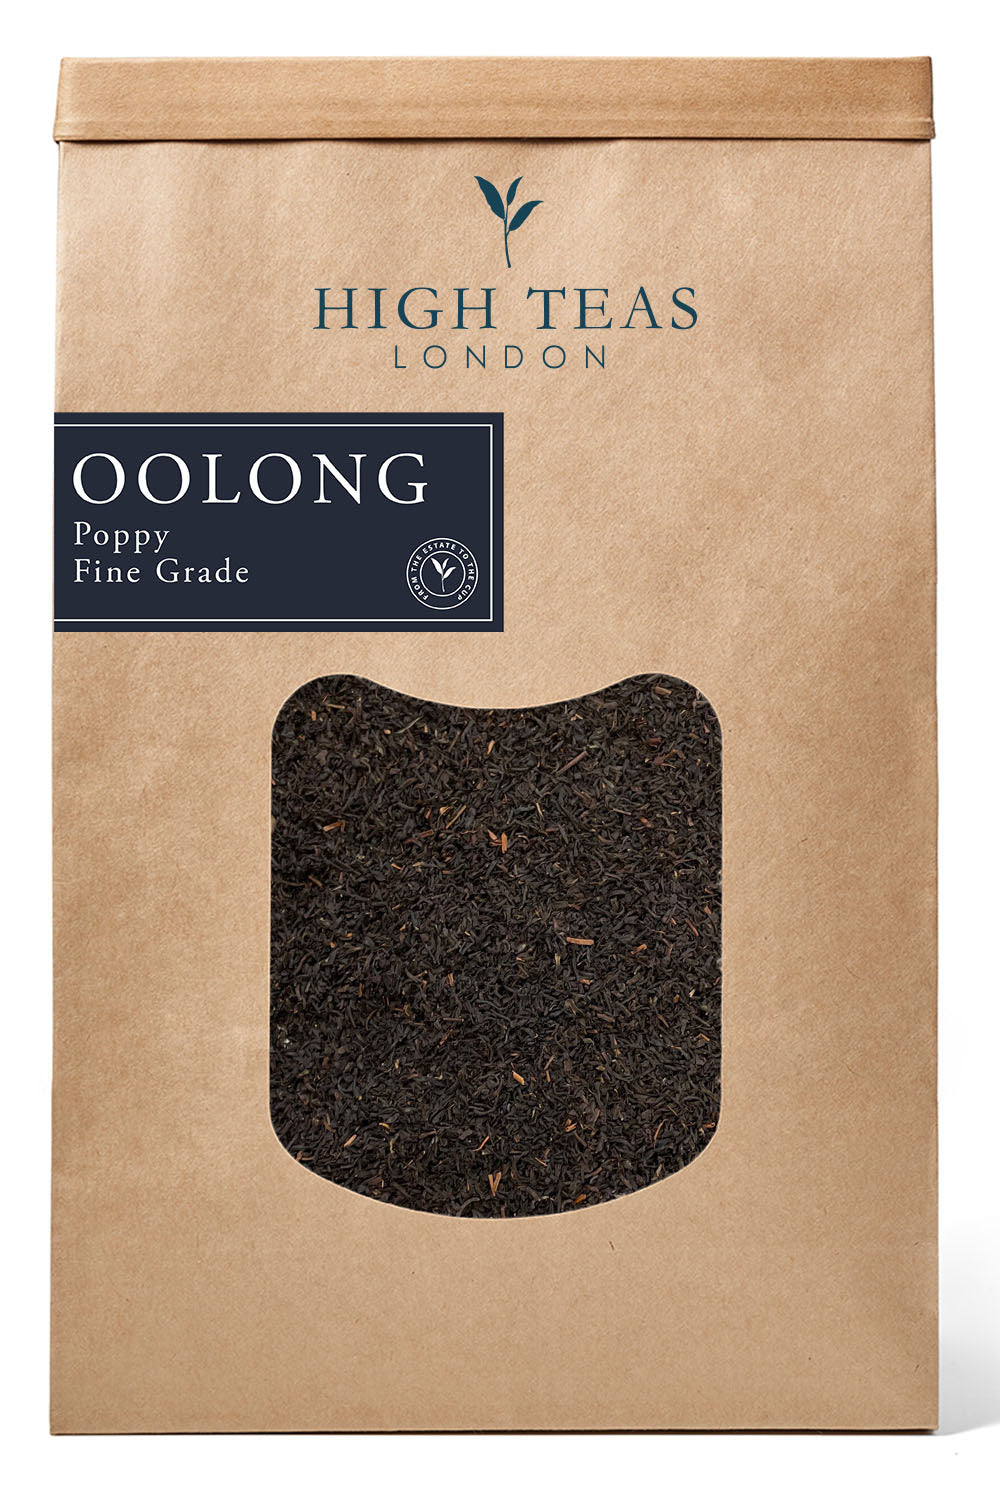 Formosa Oolong - Poppy Fine Grade-500g-Loose Leaf Tea-High Teas